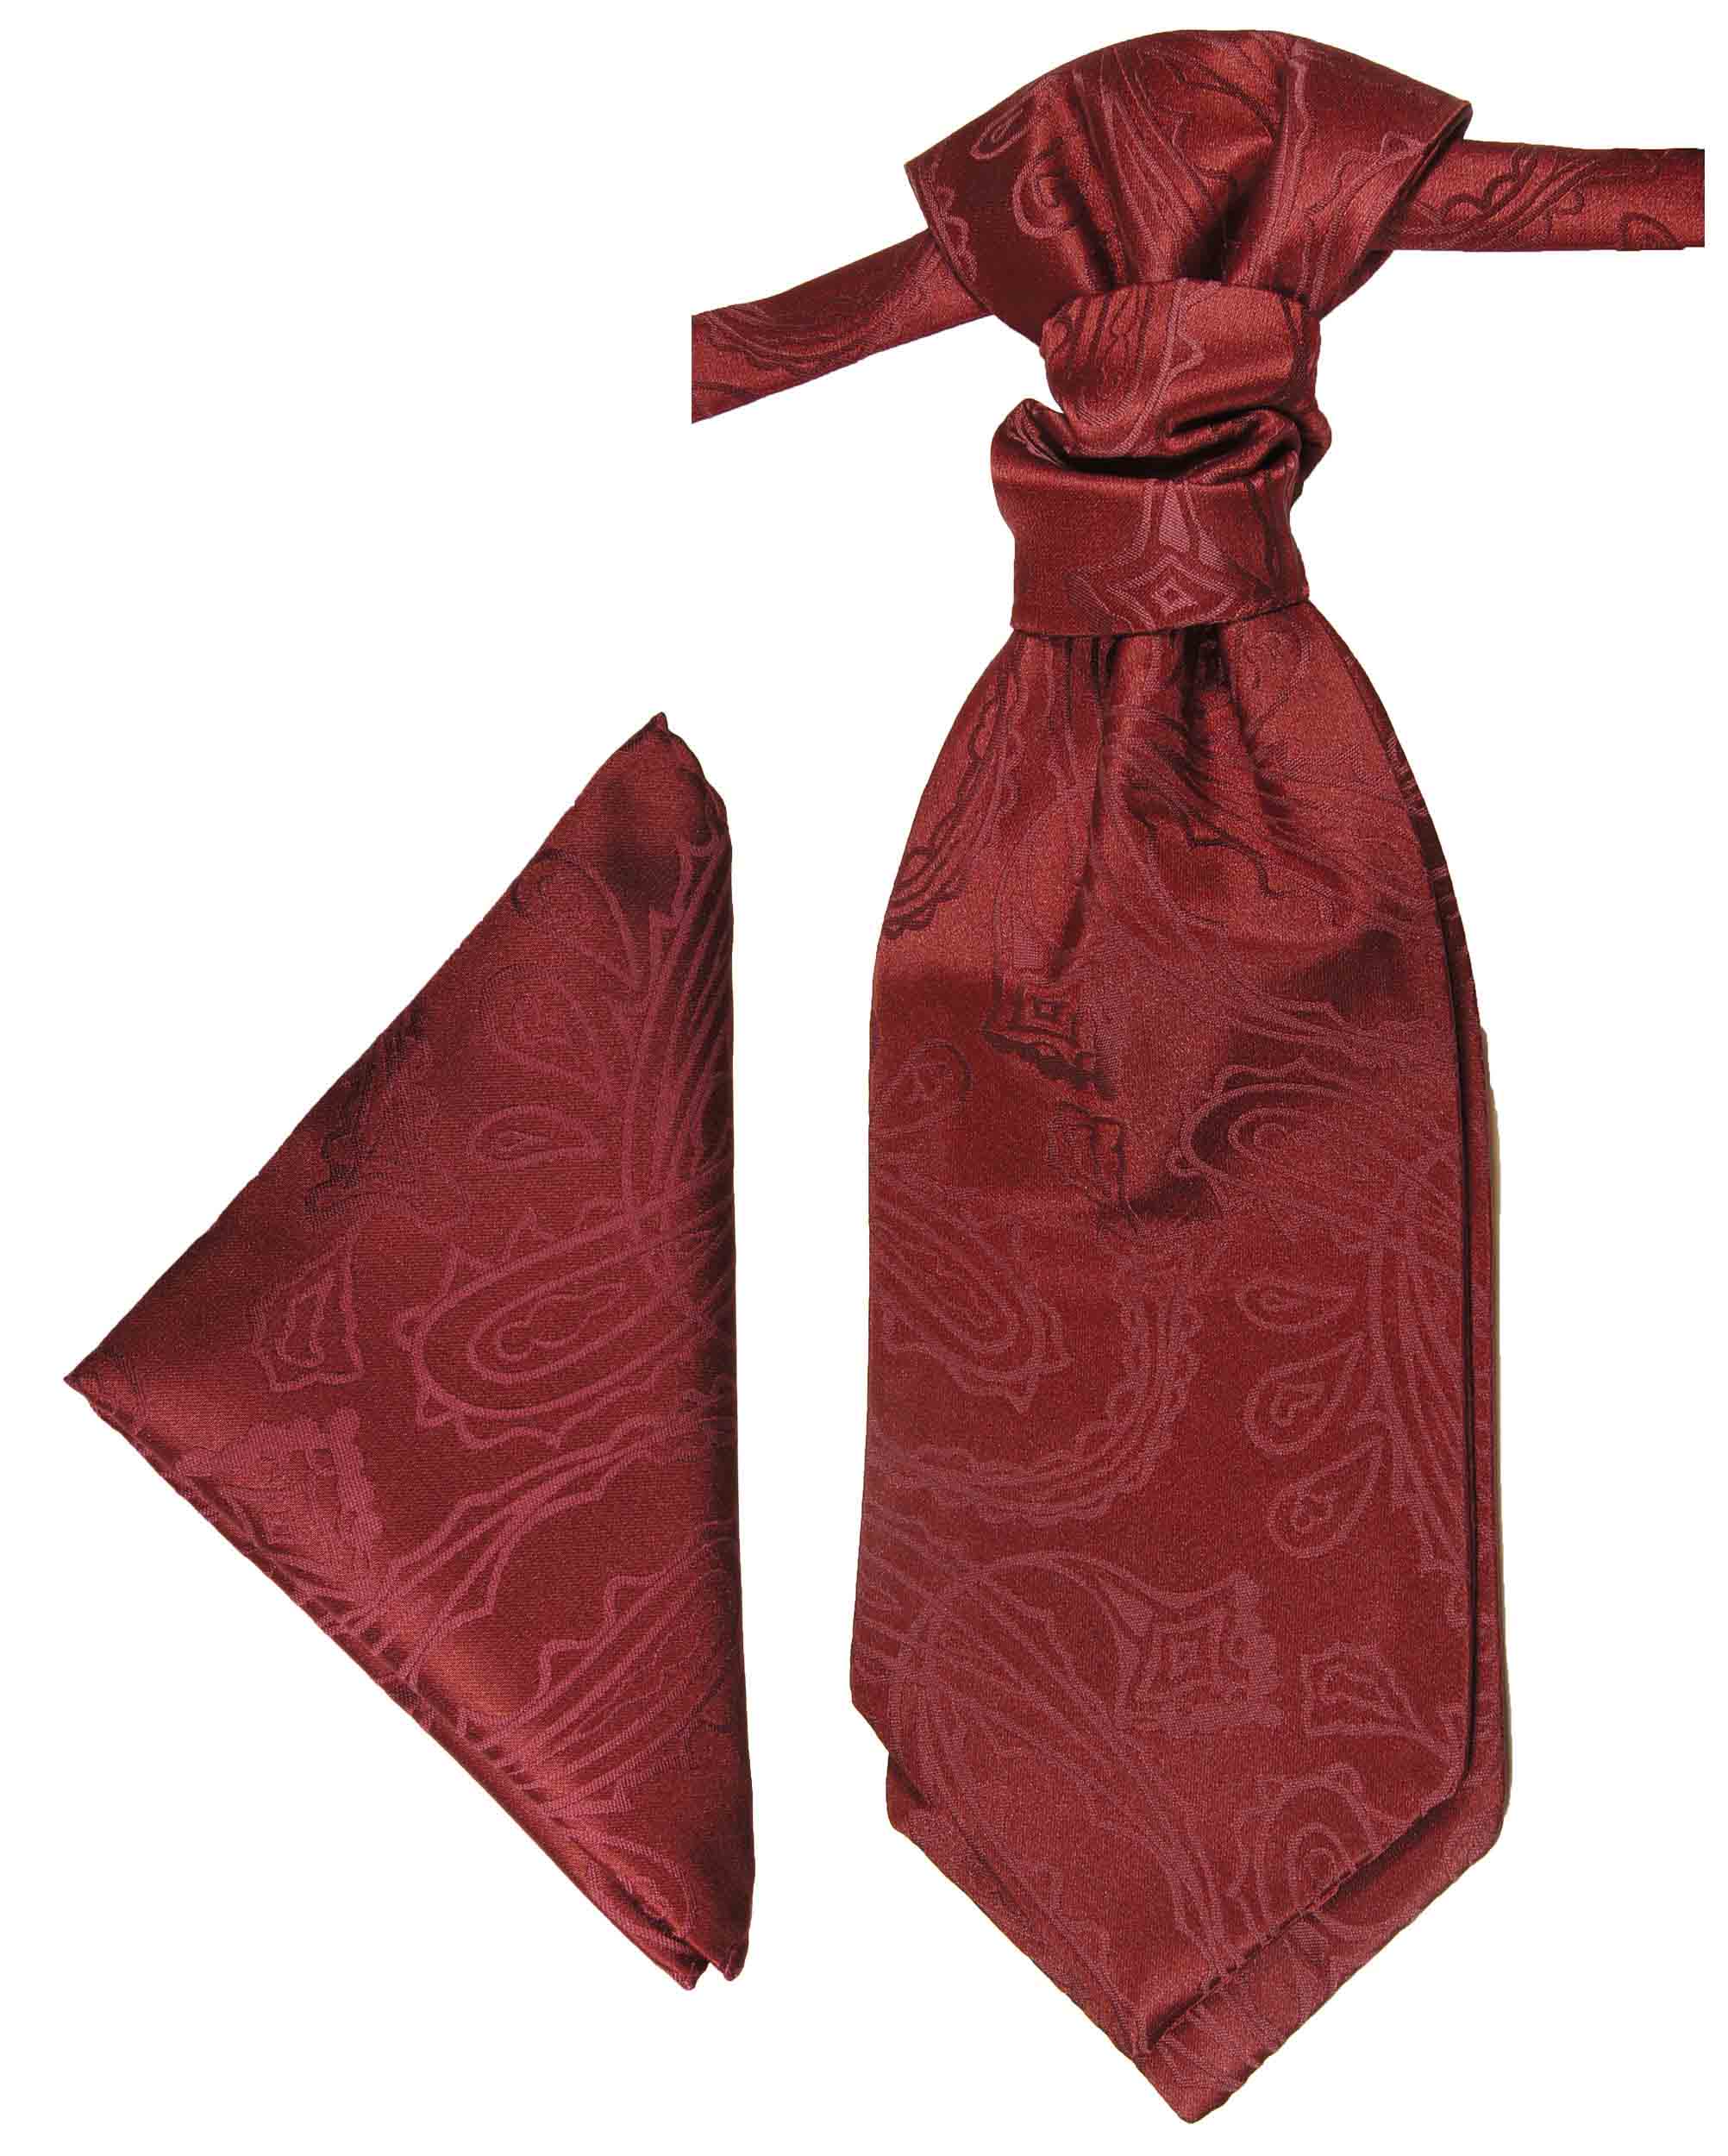 for Formal Occasions Men/'s Solid Burgundy Full Ascot Cravat Tie and Handkerchief